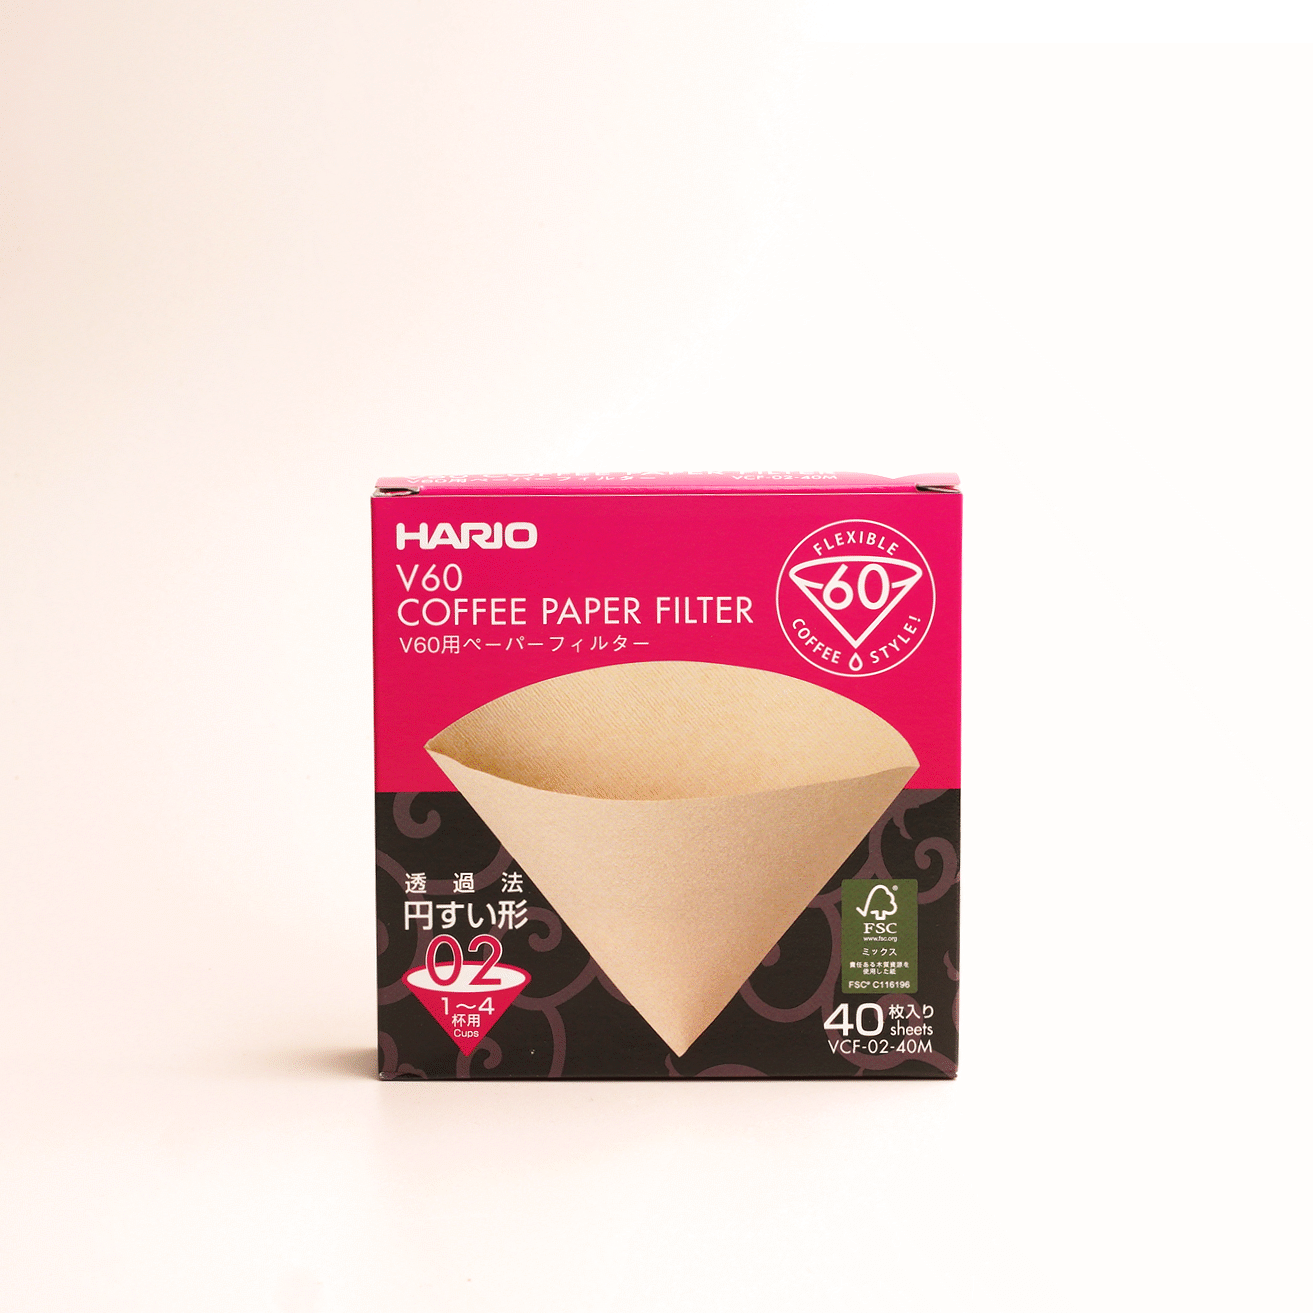 Hario 02 Filter | V60 Coffee Filters | C41 Coffee Shop